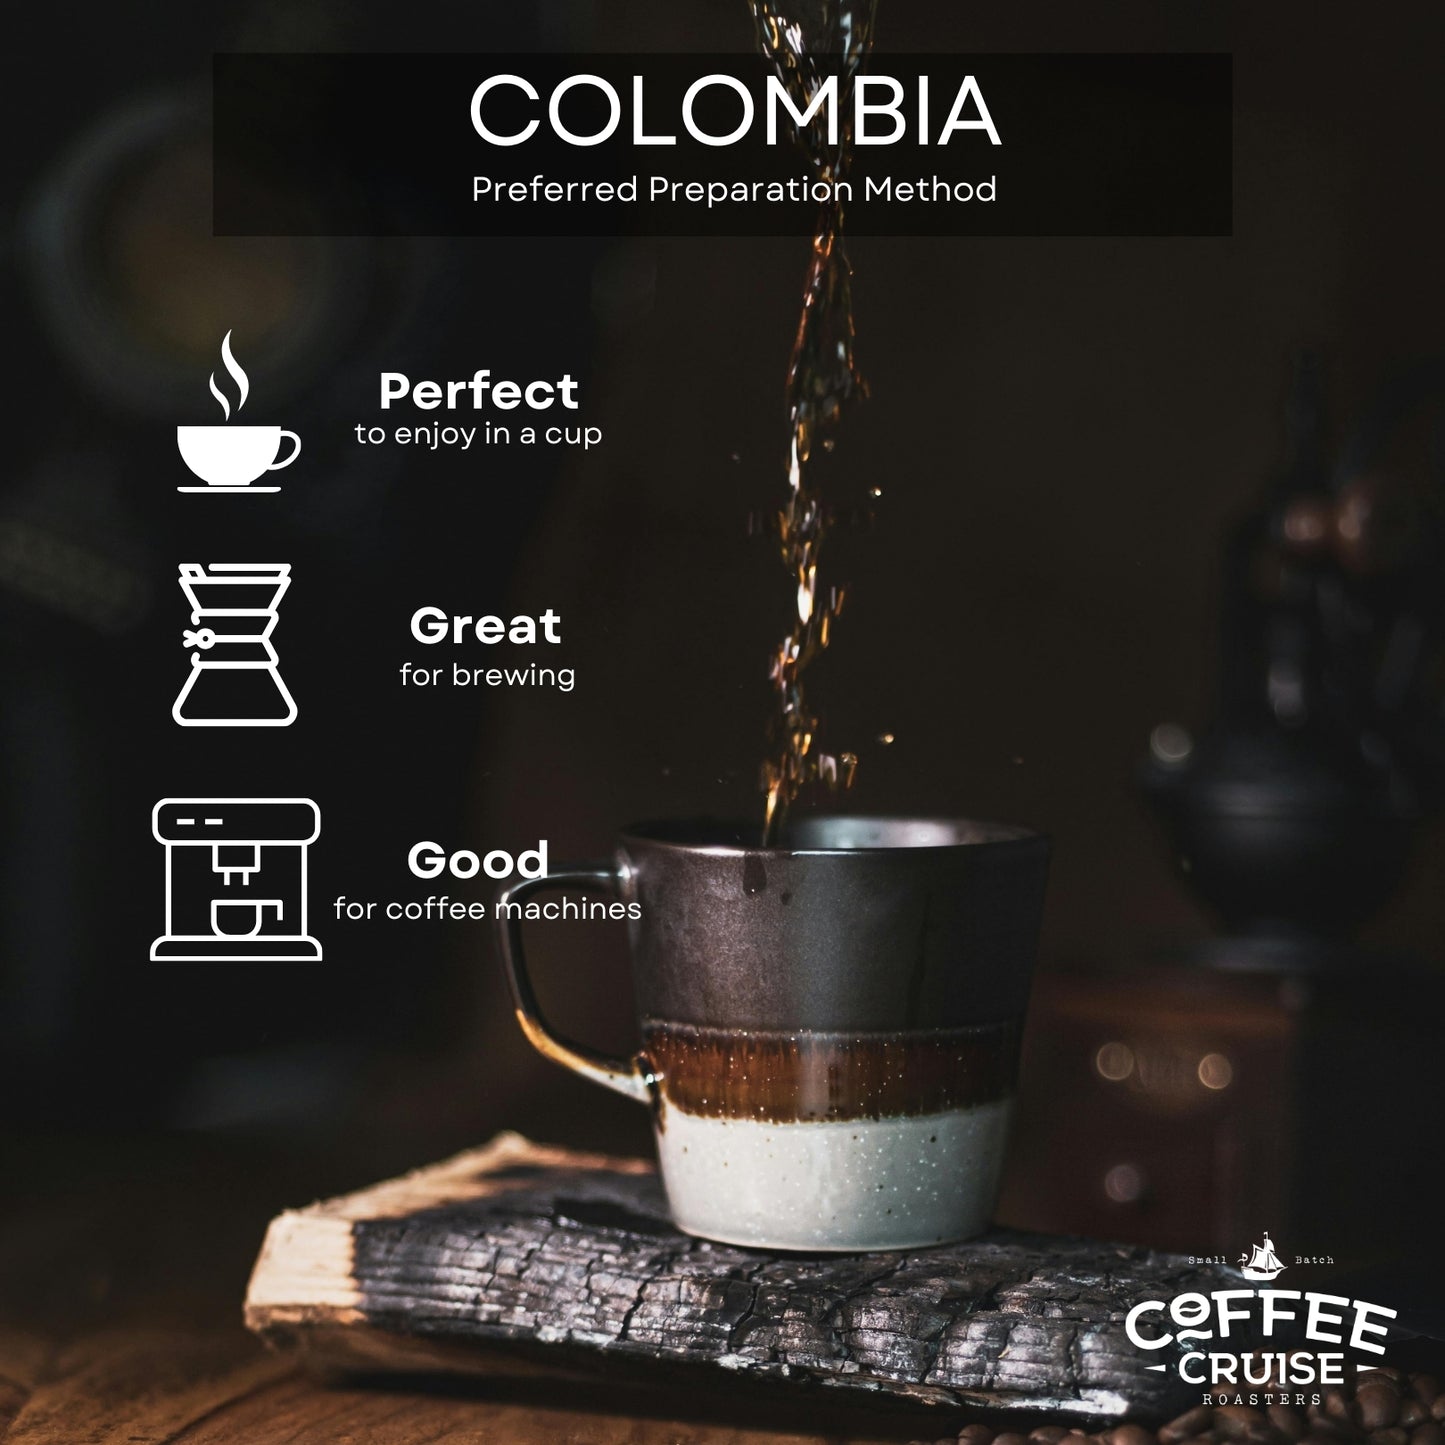 COFFEE CRUISE Colombia Ground Coffee 250g - Medium Roasting - Aroma Berries - For All Coffee Machines - 100% Arabica